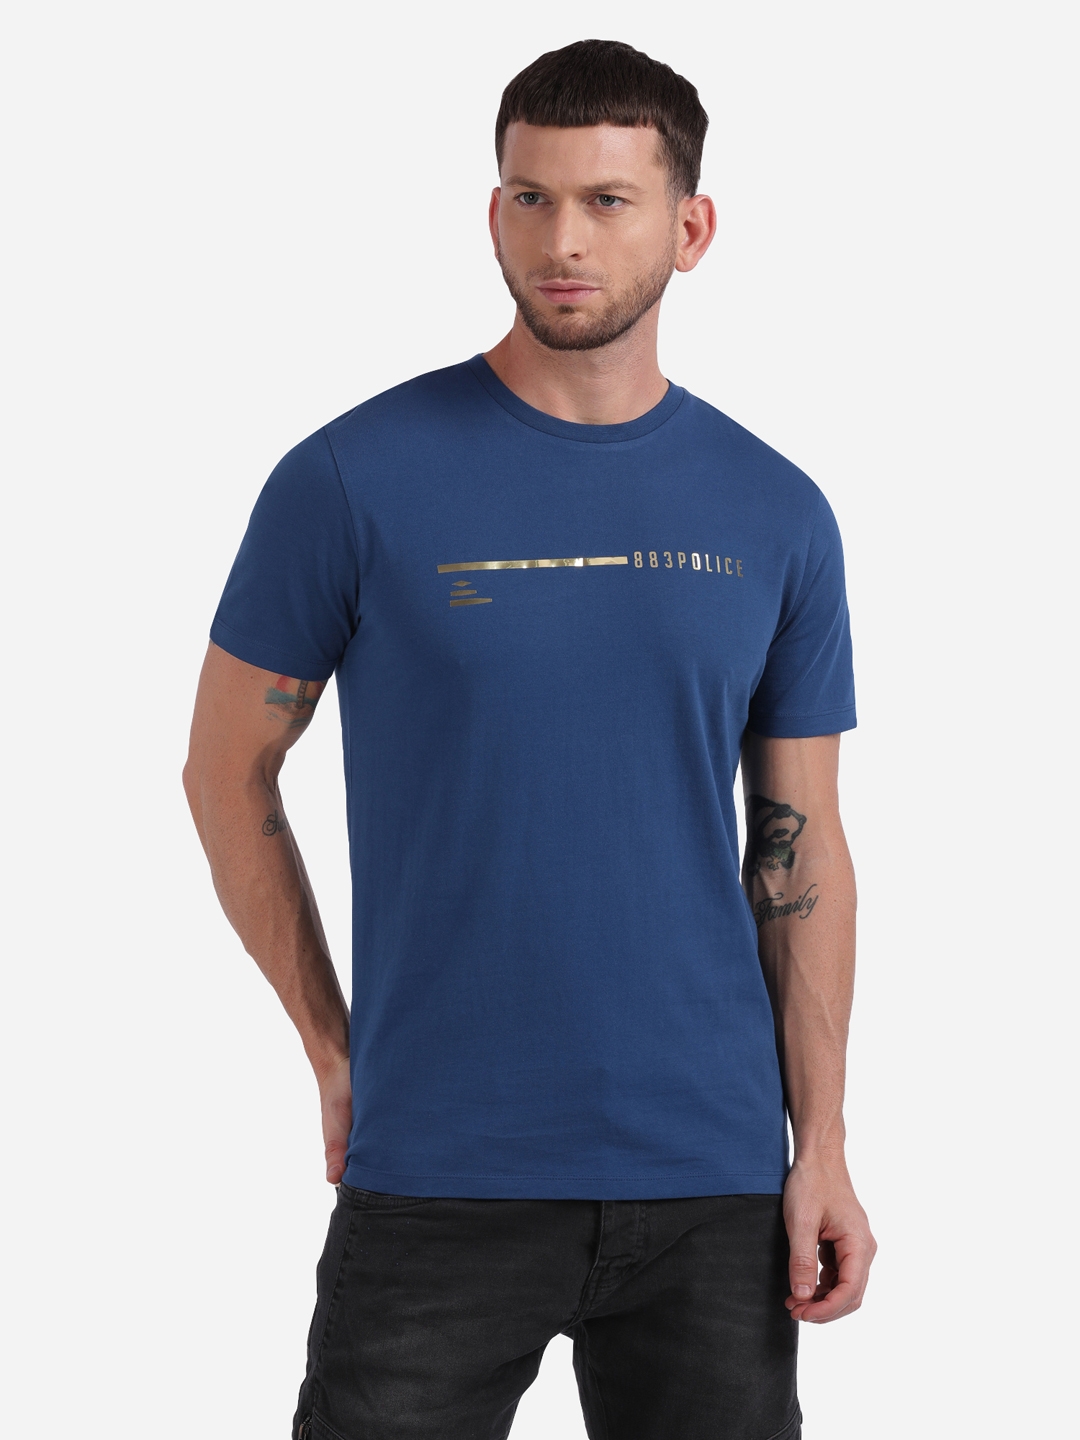 883 Police | Blue Printed Foil T-Shirt